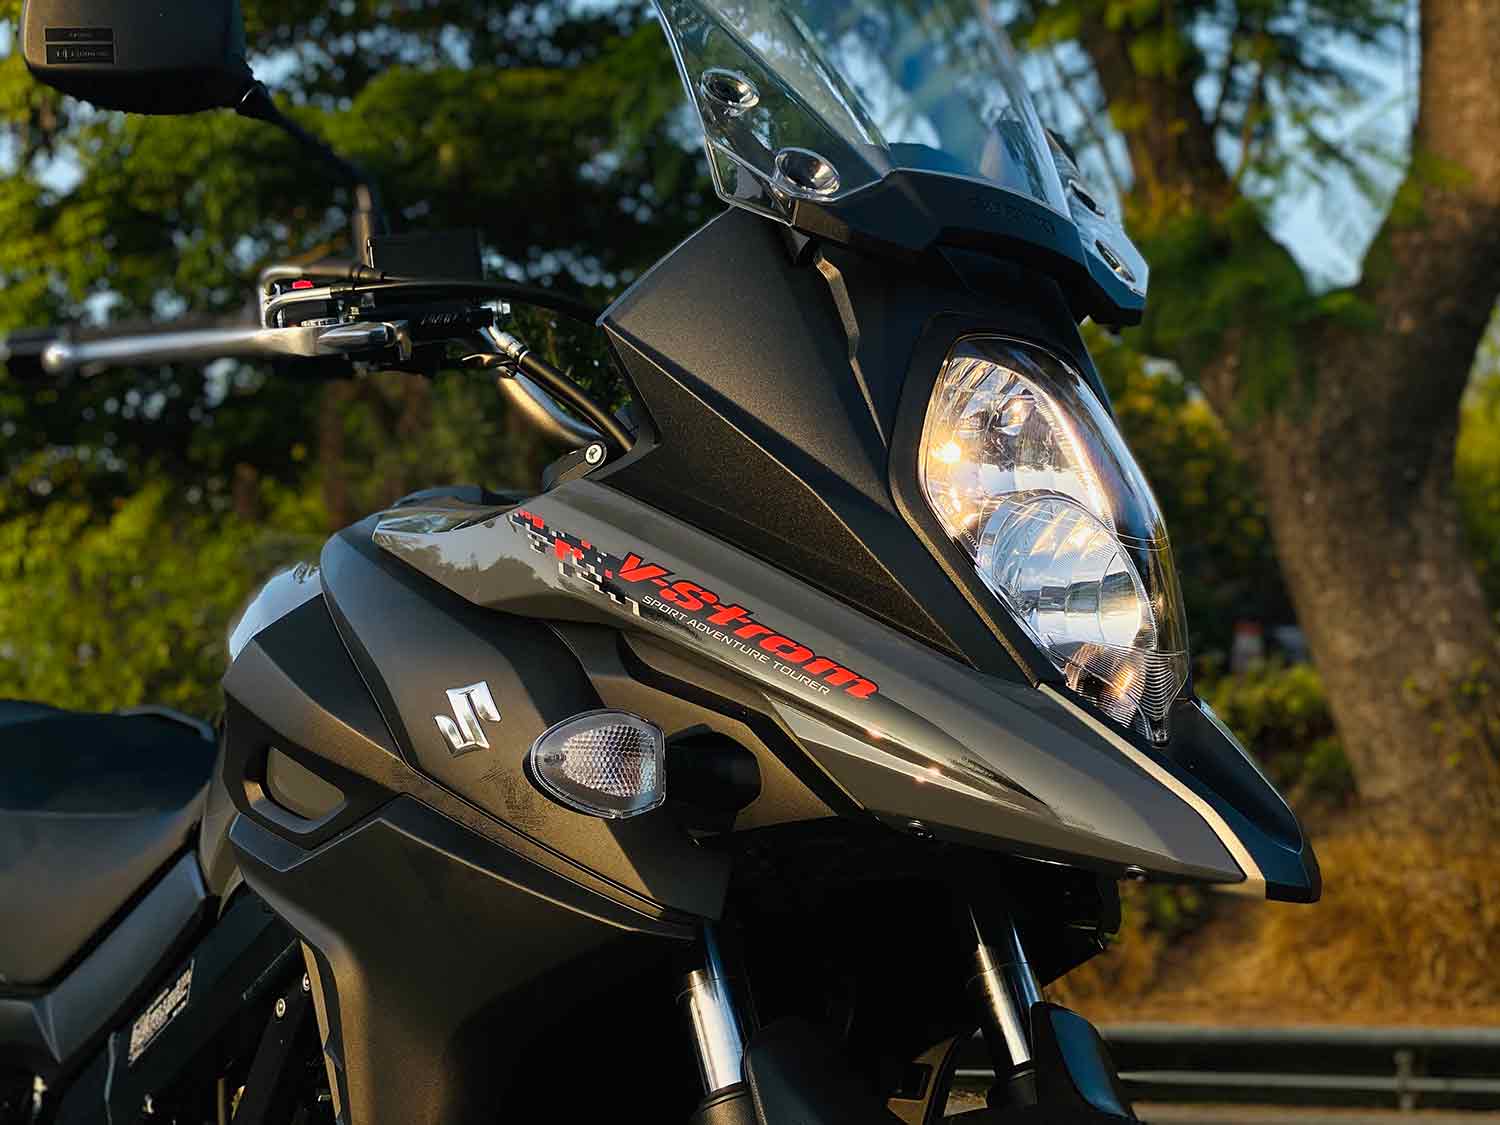 2020 Suzuki V-Strom 650XT Adventure Review (14 Fast Facts)